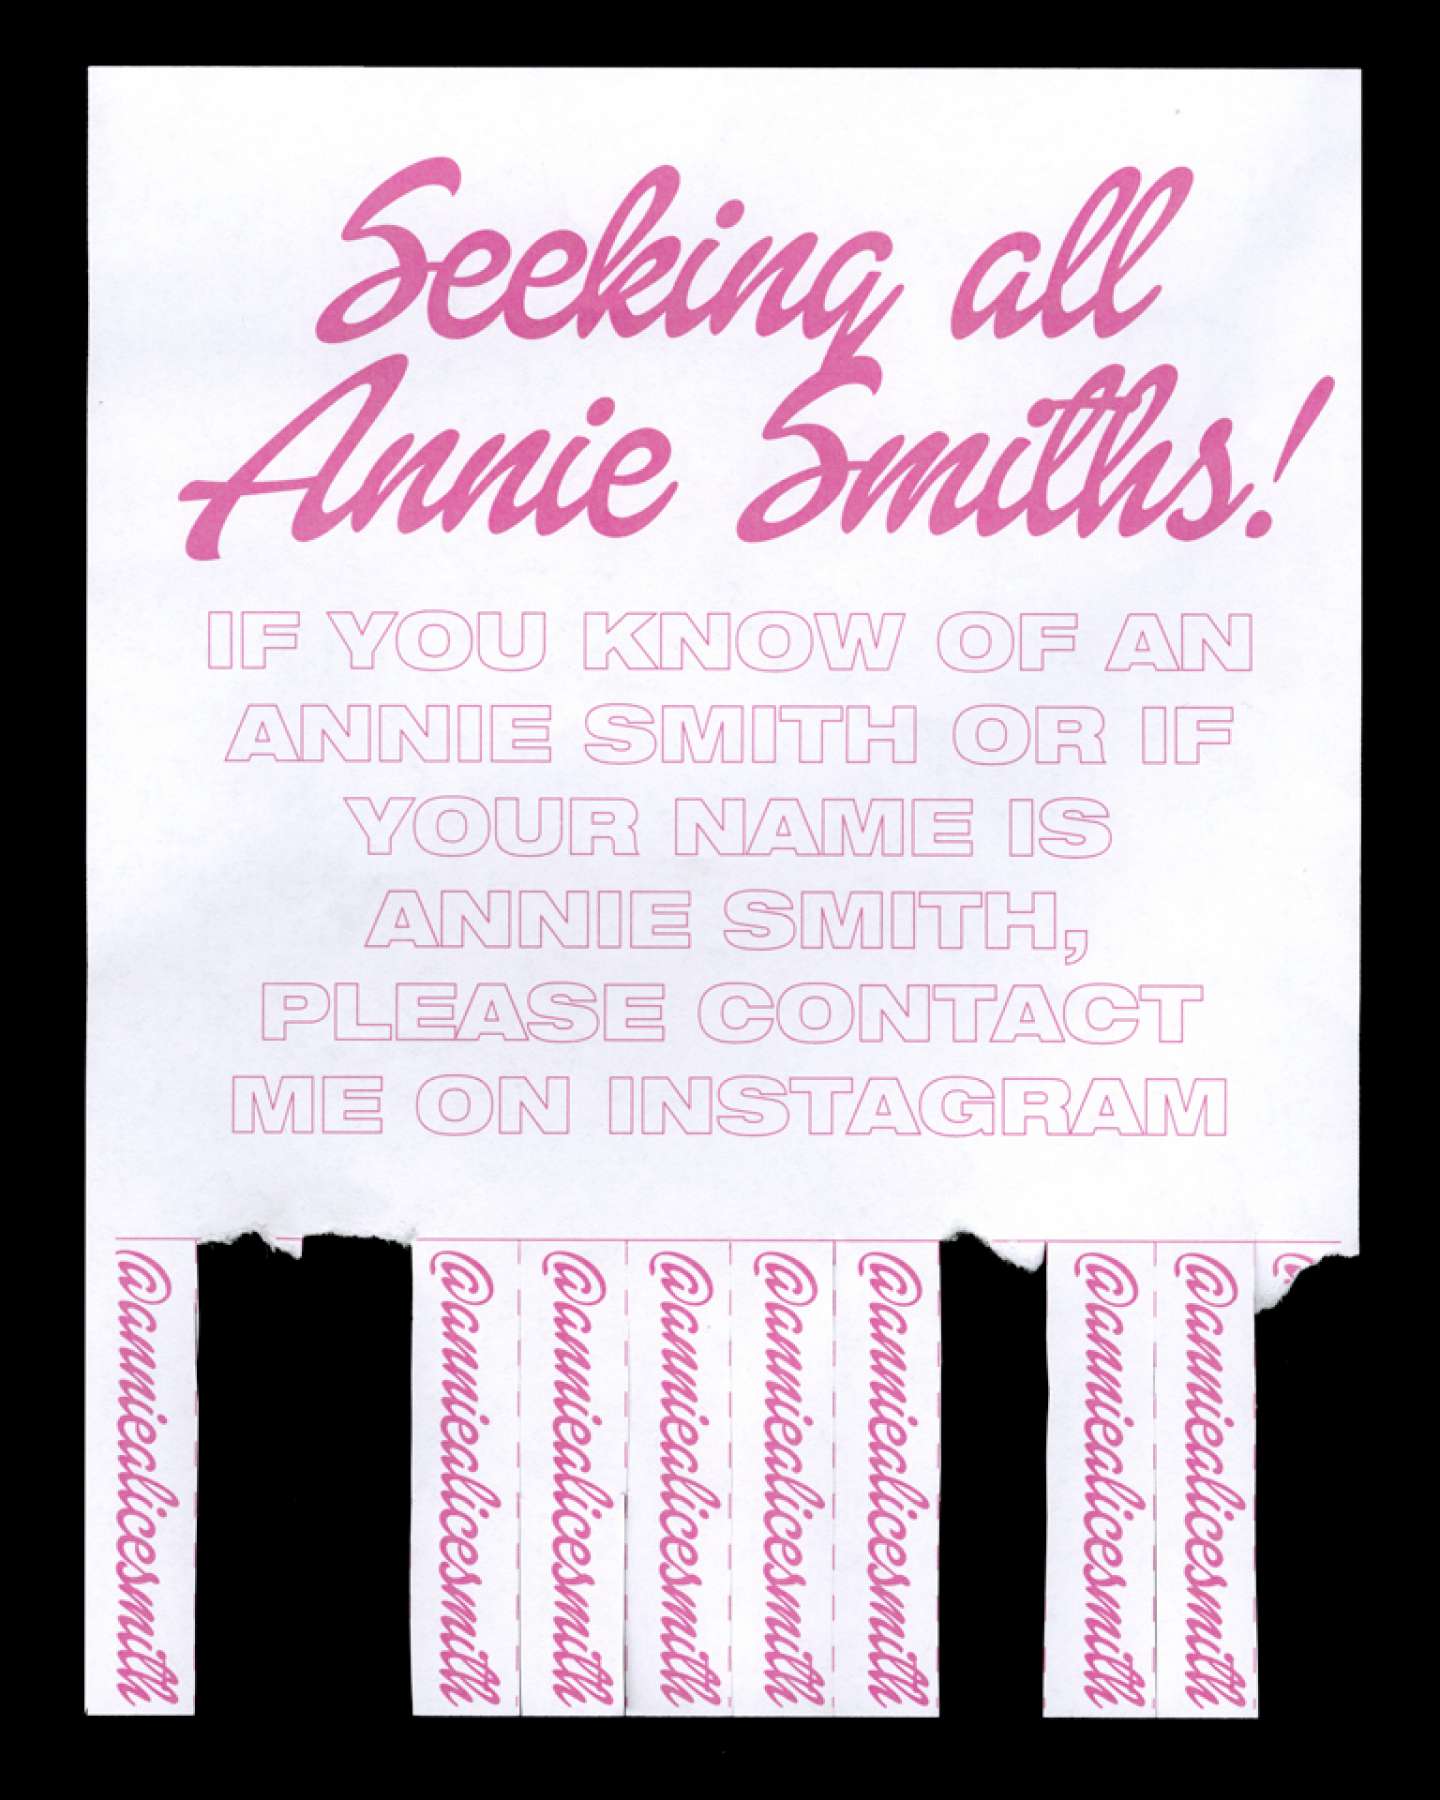 Annie Smith Party